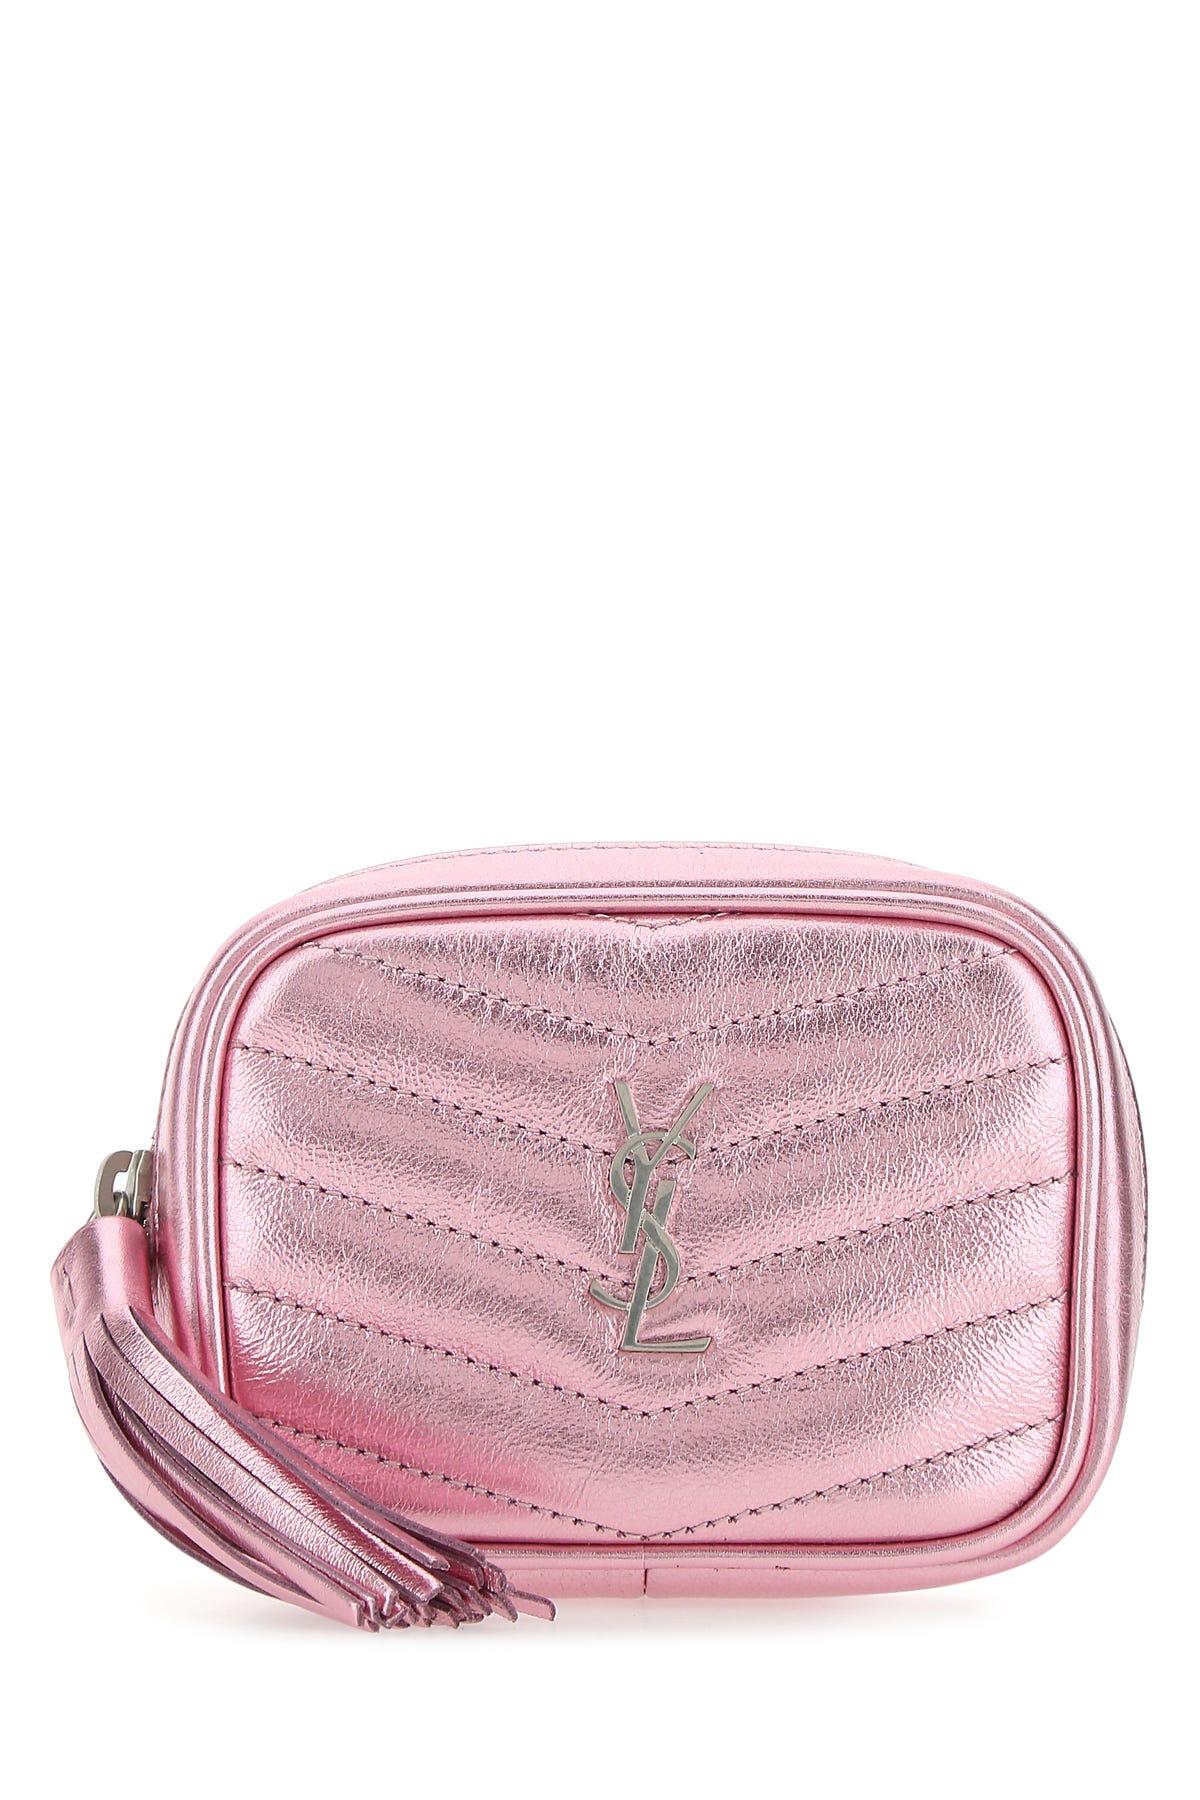 Saint Laurent Leather Baby Lou Belt Bag in Pink